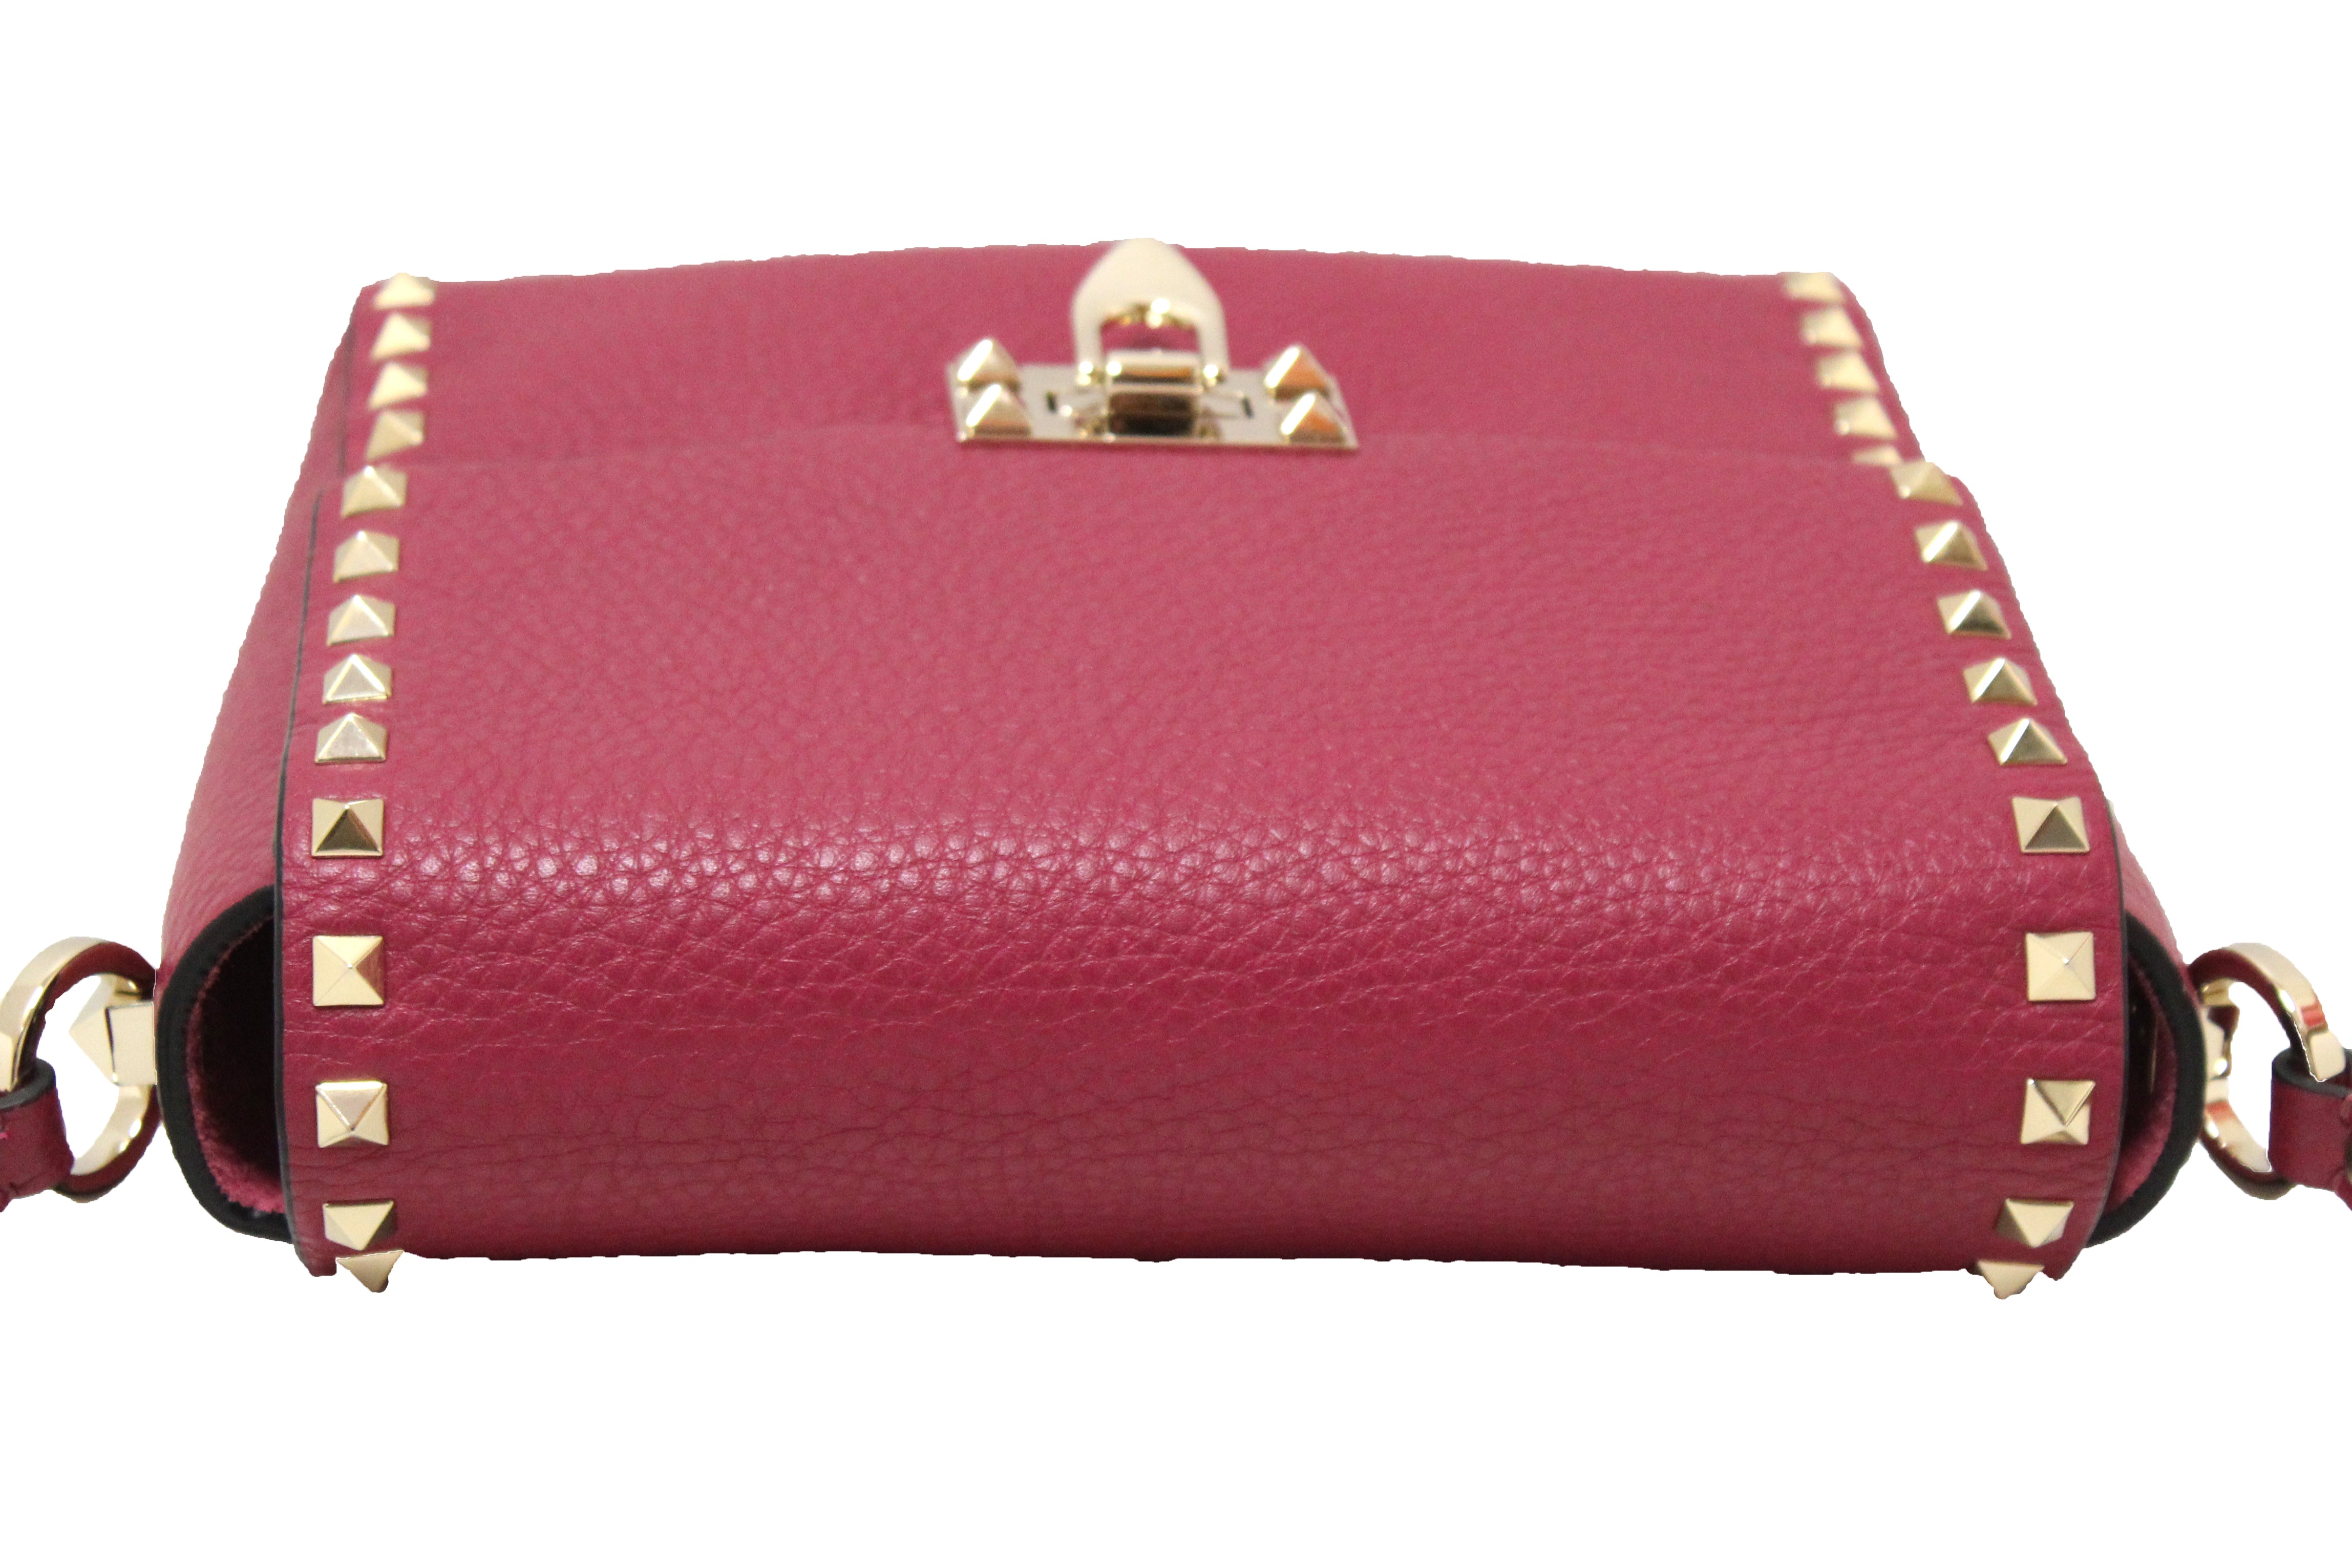 Rockstud Small Leather Shoulder Bag in Pink - Valentino Garavani